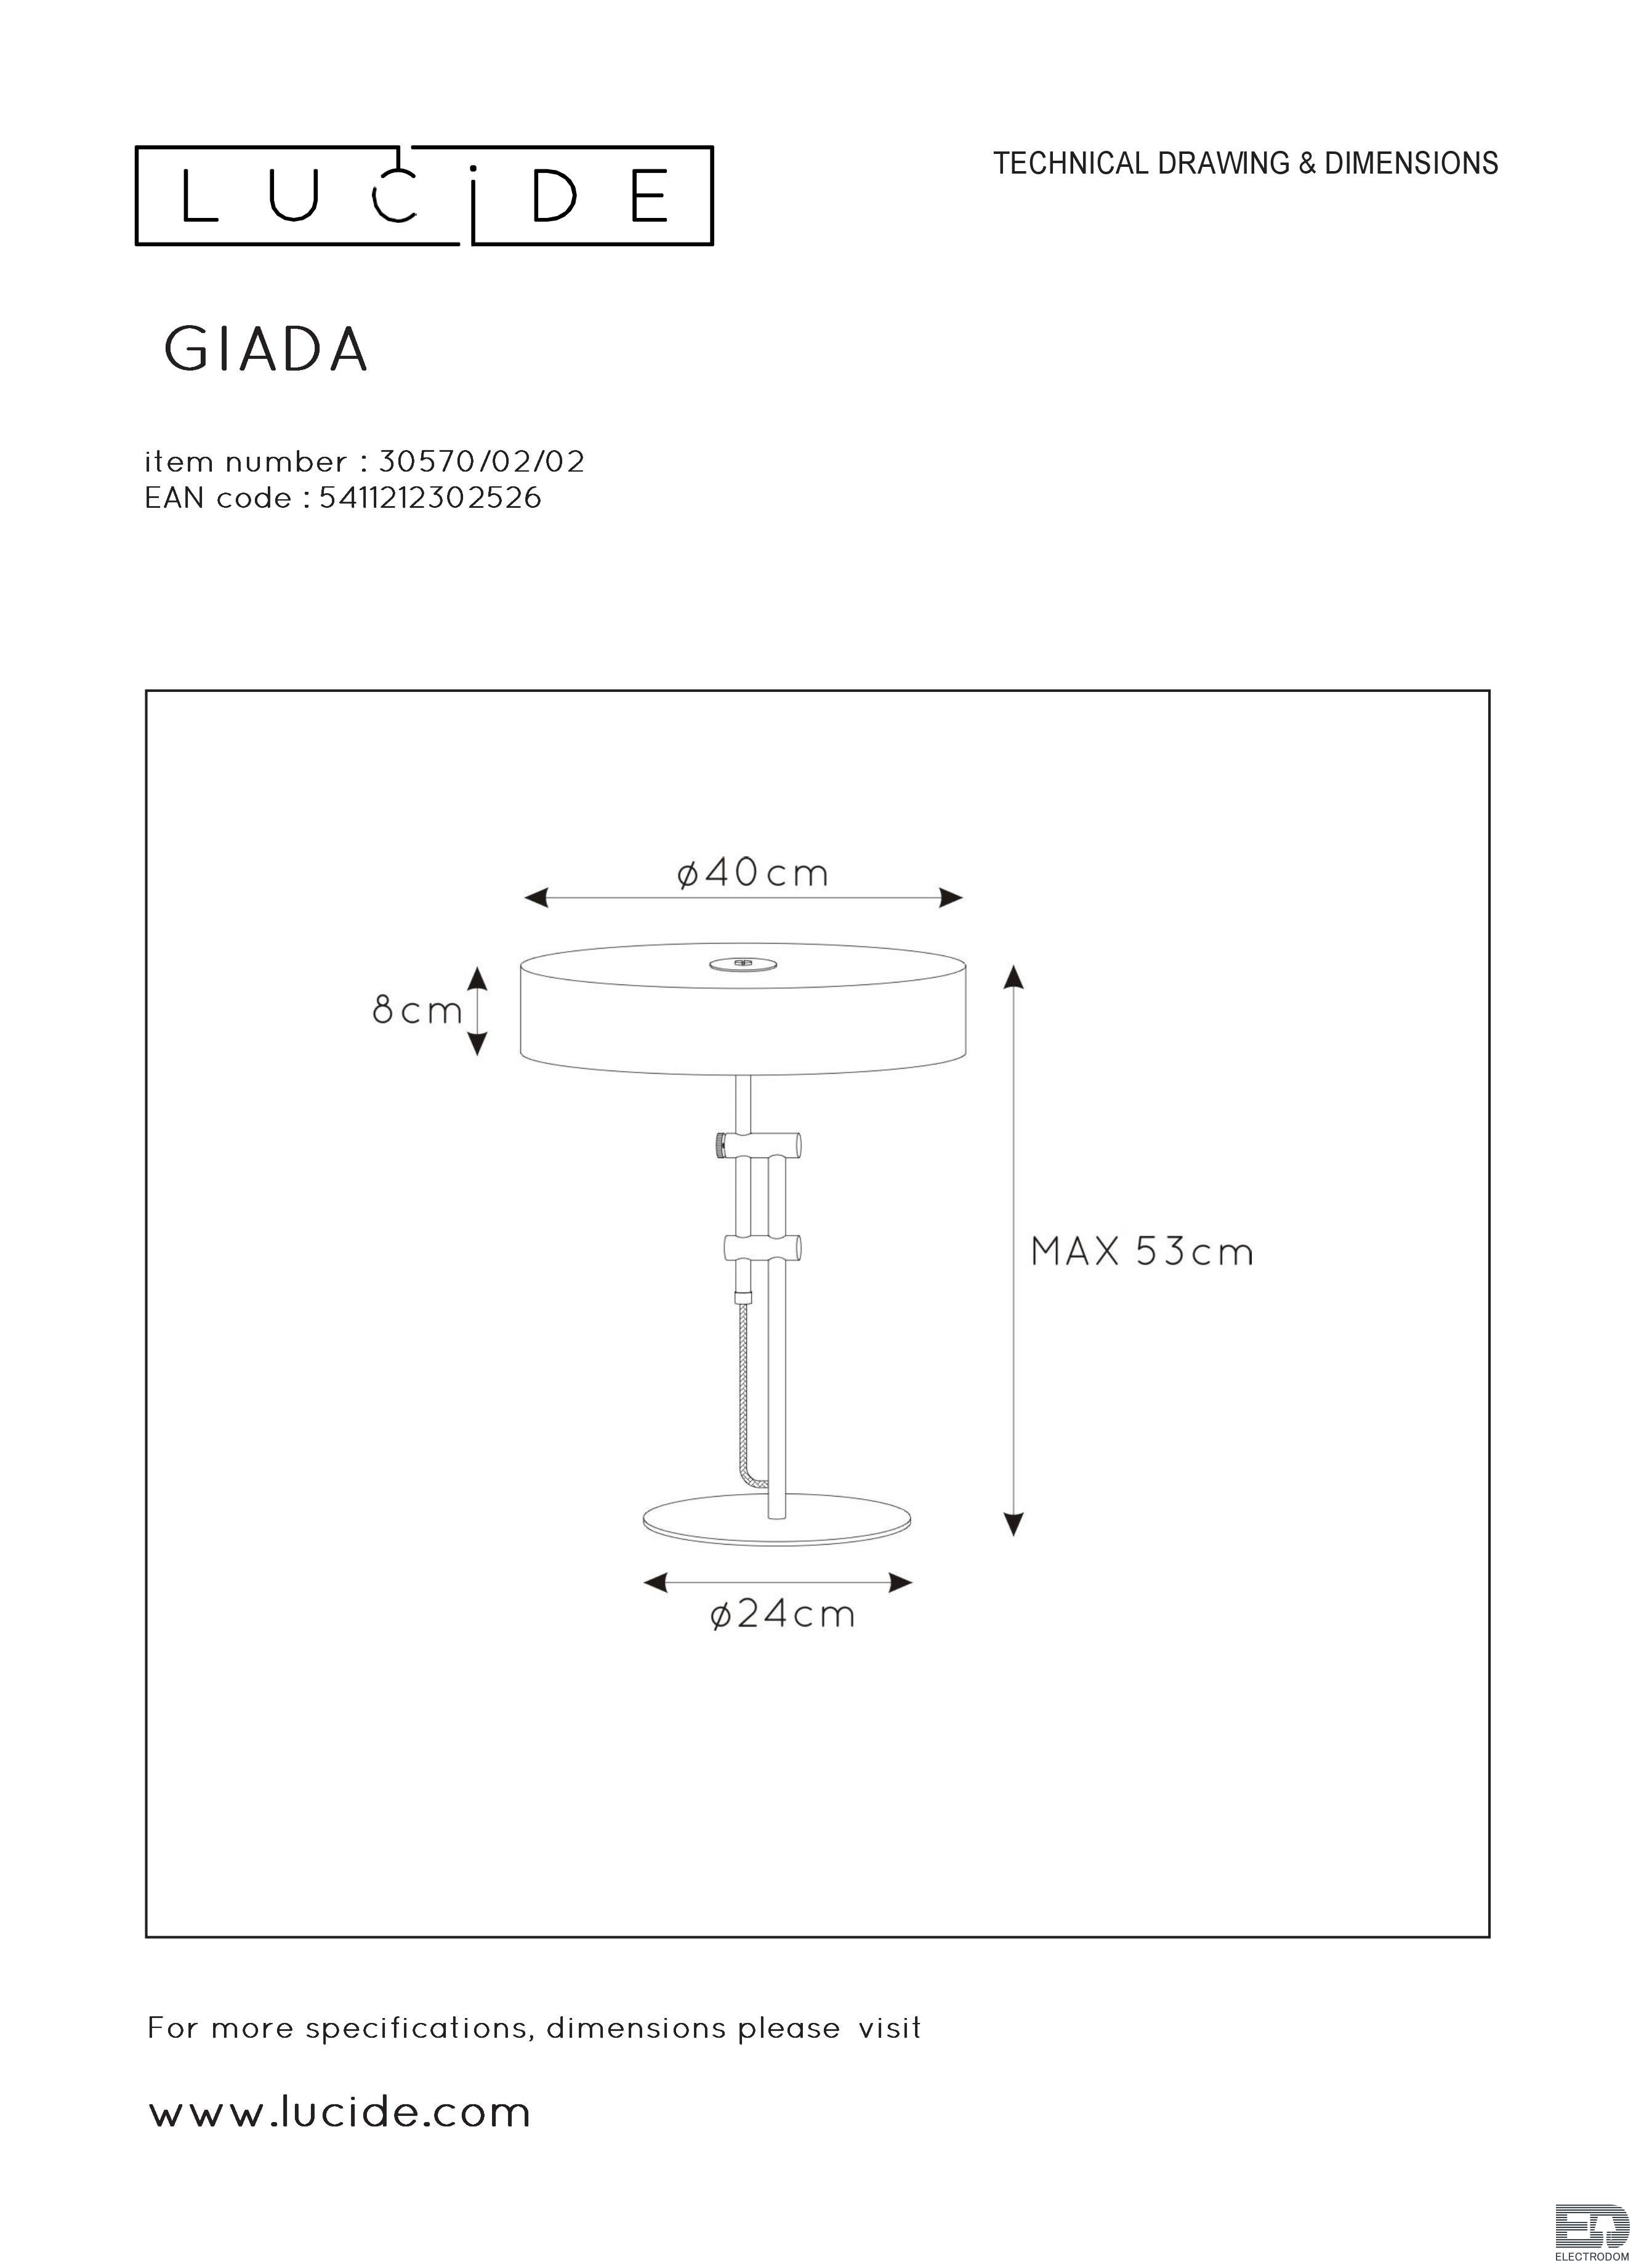 Настольная лампа Lucide Giada 30570/02/02 - цена и фото 9